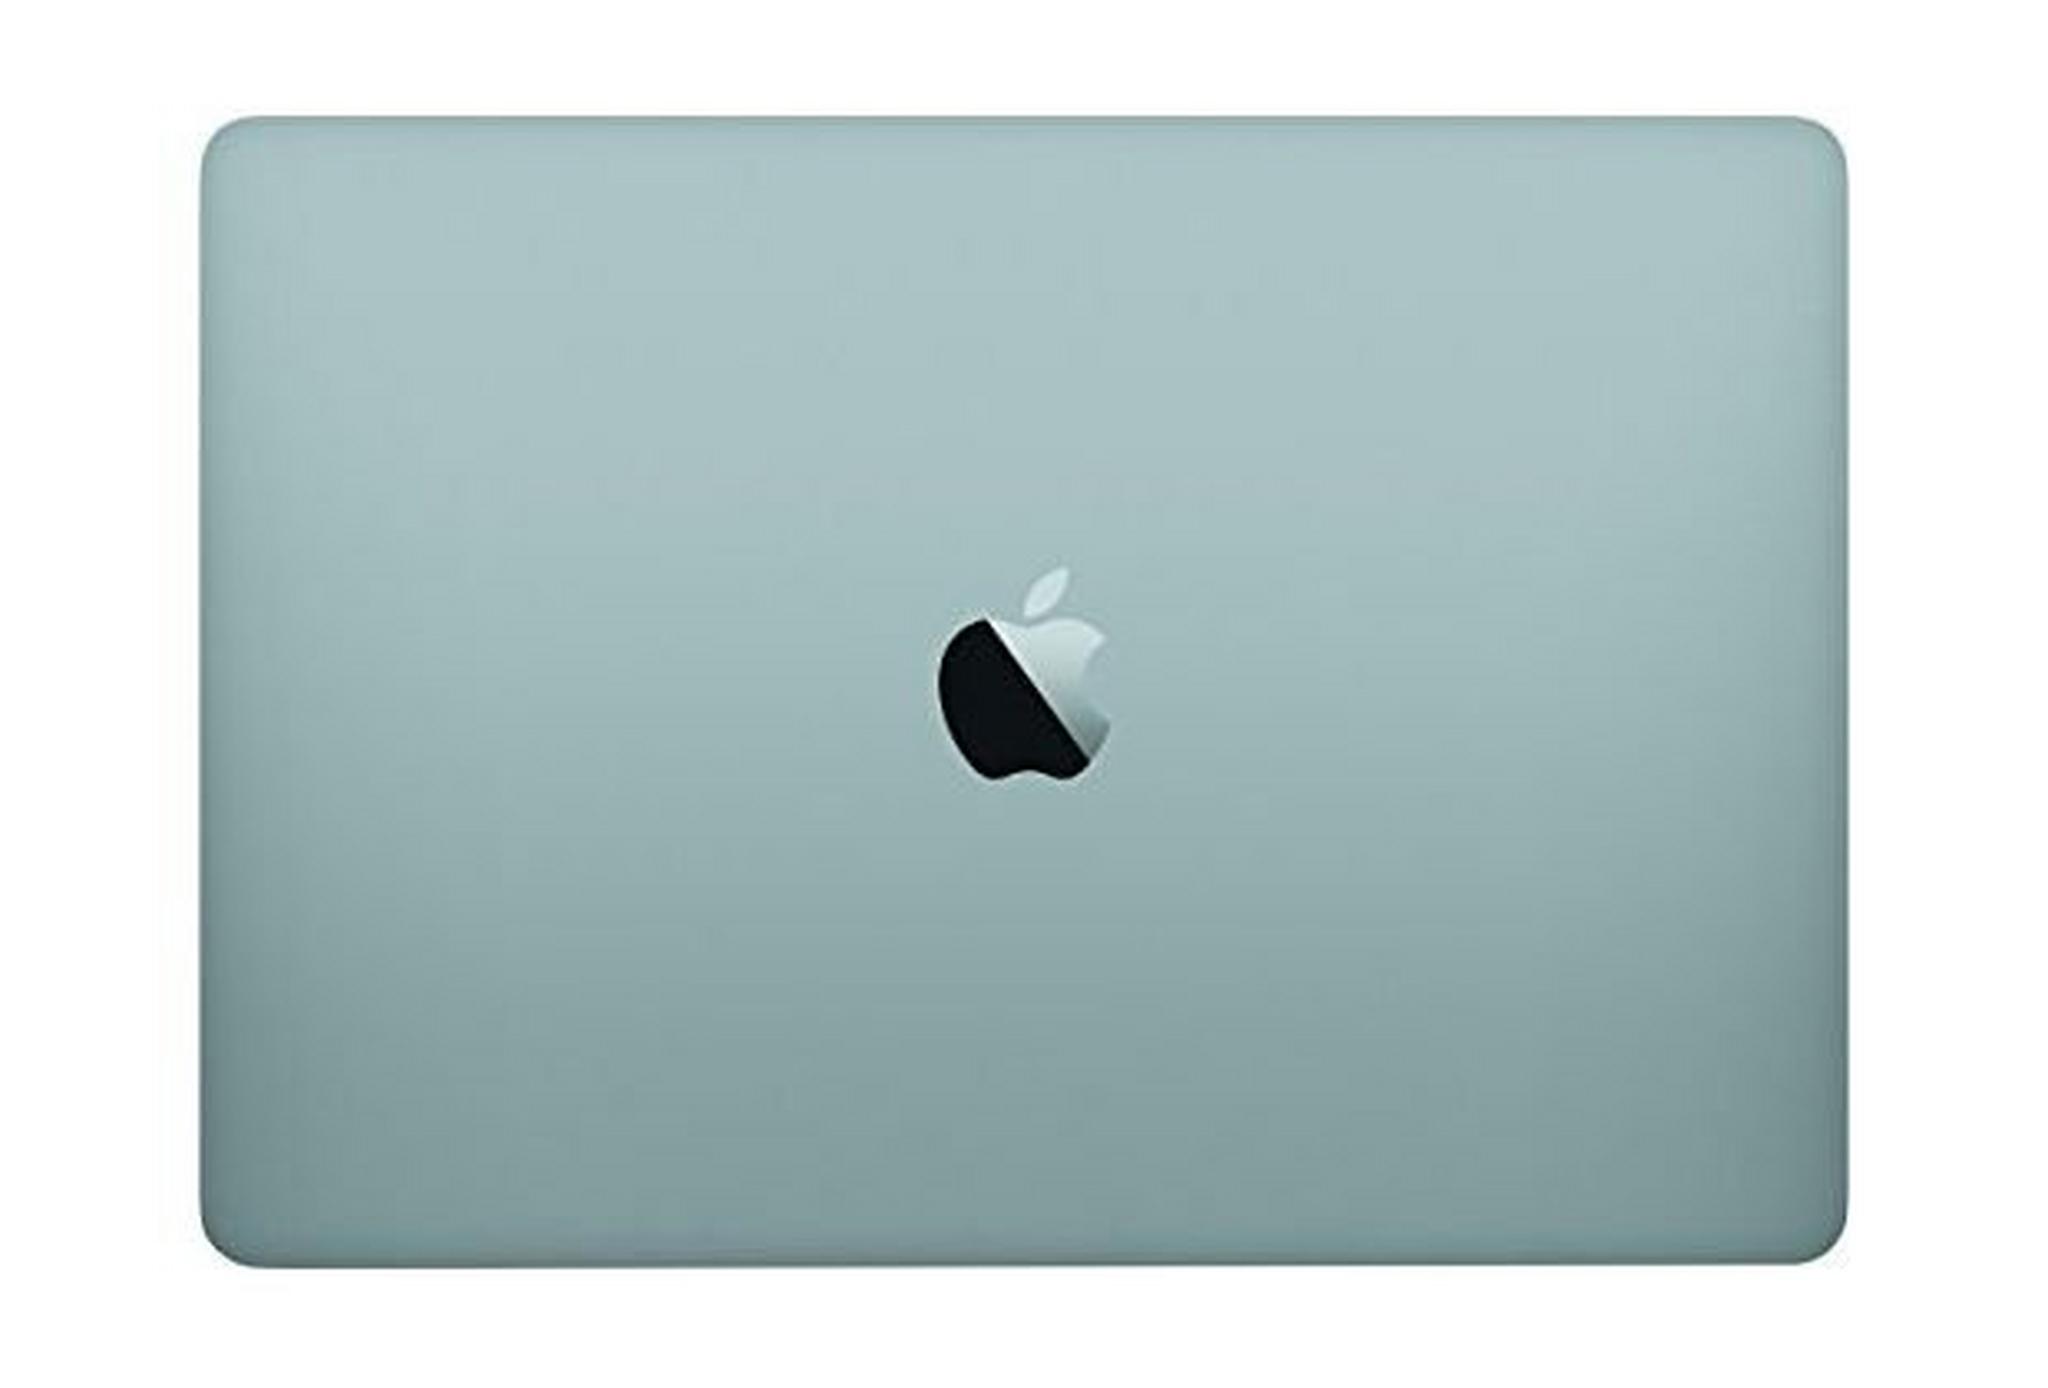 Apple MacBook Pro Intel Core i5 8GB RAM 128GB SSD 13-inch Laptop (MPXQ2AE/A) - Space Grey